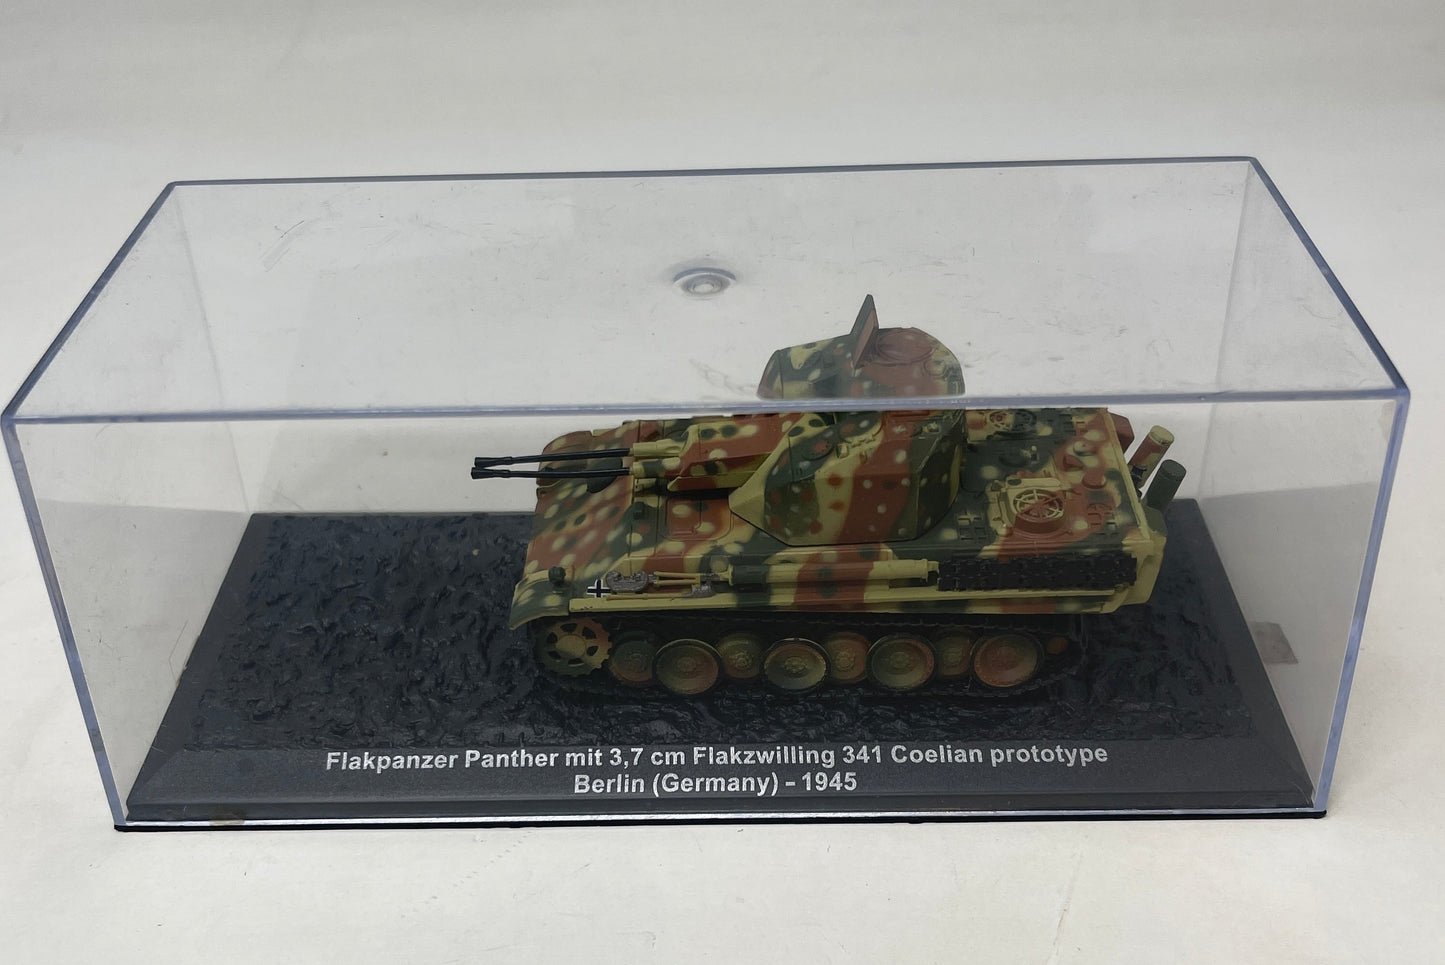 1/72 Scale Flakpanzer Panther mit 3.7cm Flakwilling 341 Coelian prototype Berlin Germany 1945